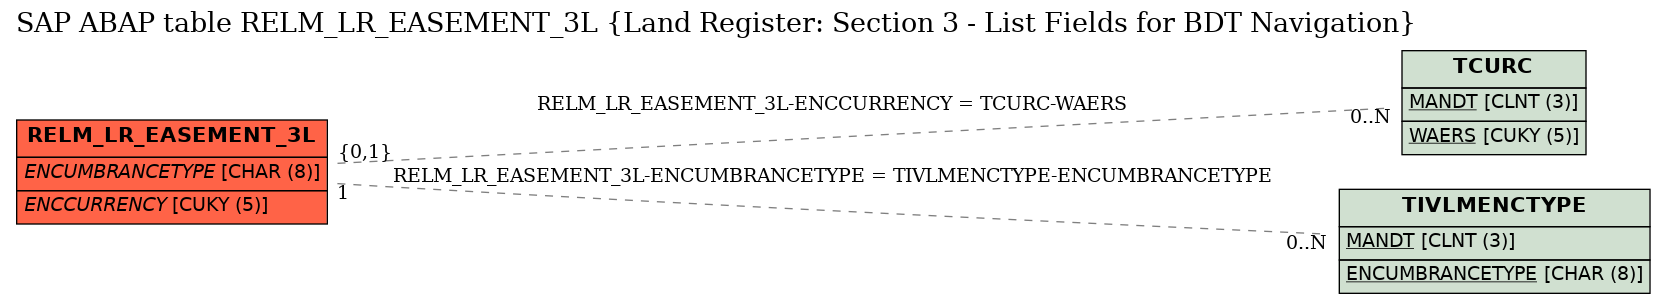 E-R Diagram for table RELM_LR_EASEMENT_3L (Land Register: Section 3 - List Fields for BDT Navigation)